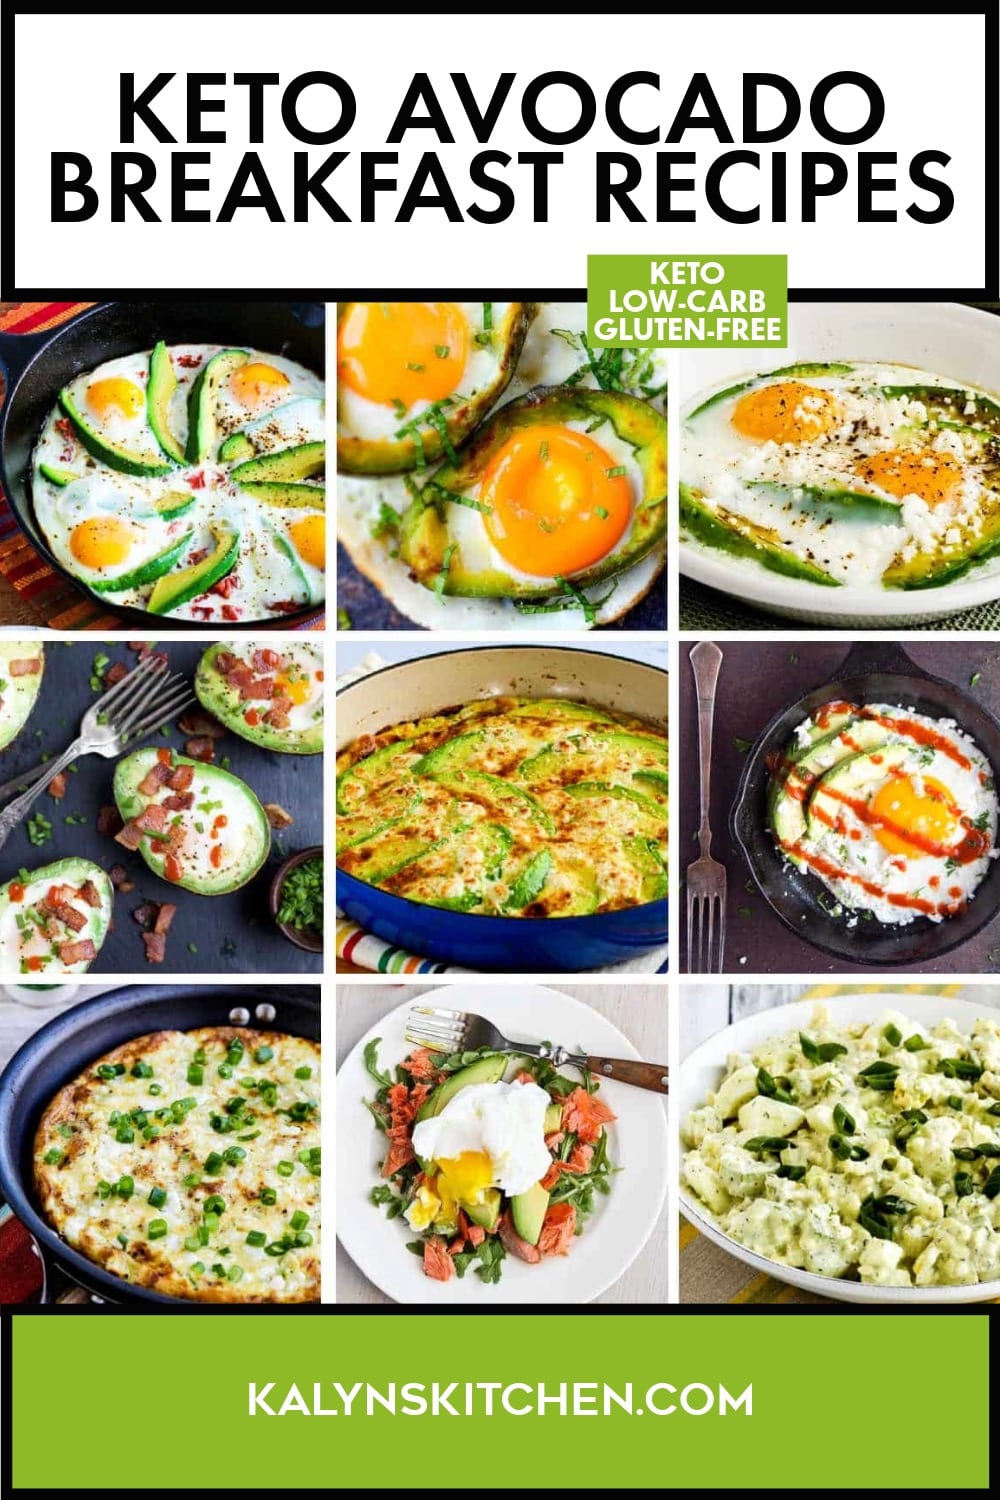 Pinterest image of Keto Avocado Breakfast Recipes